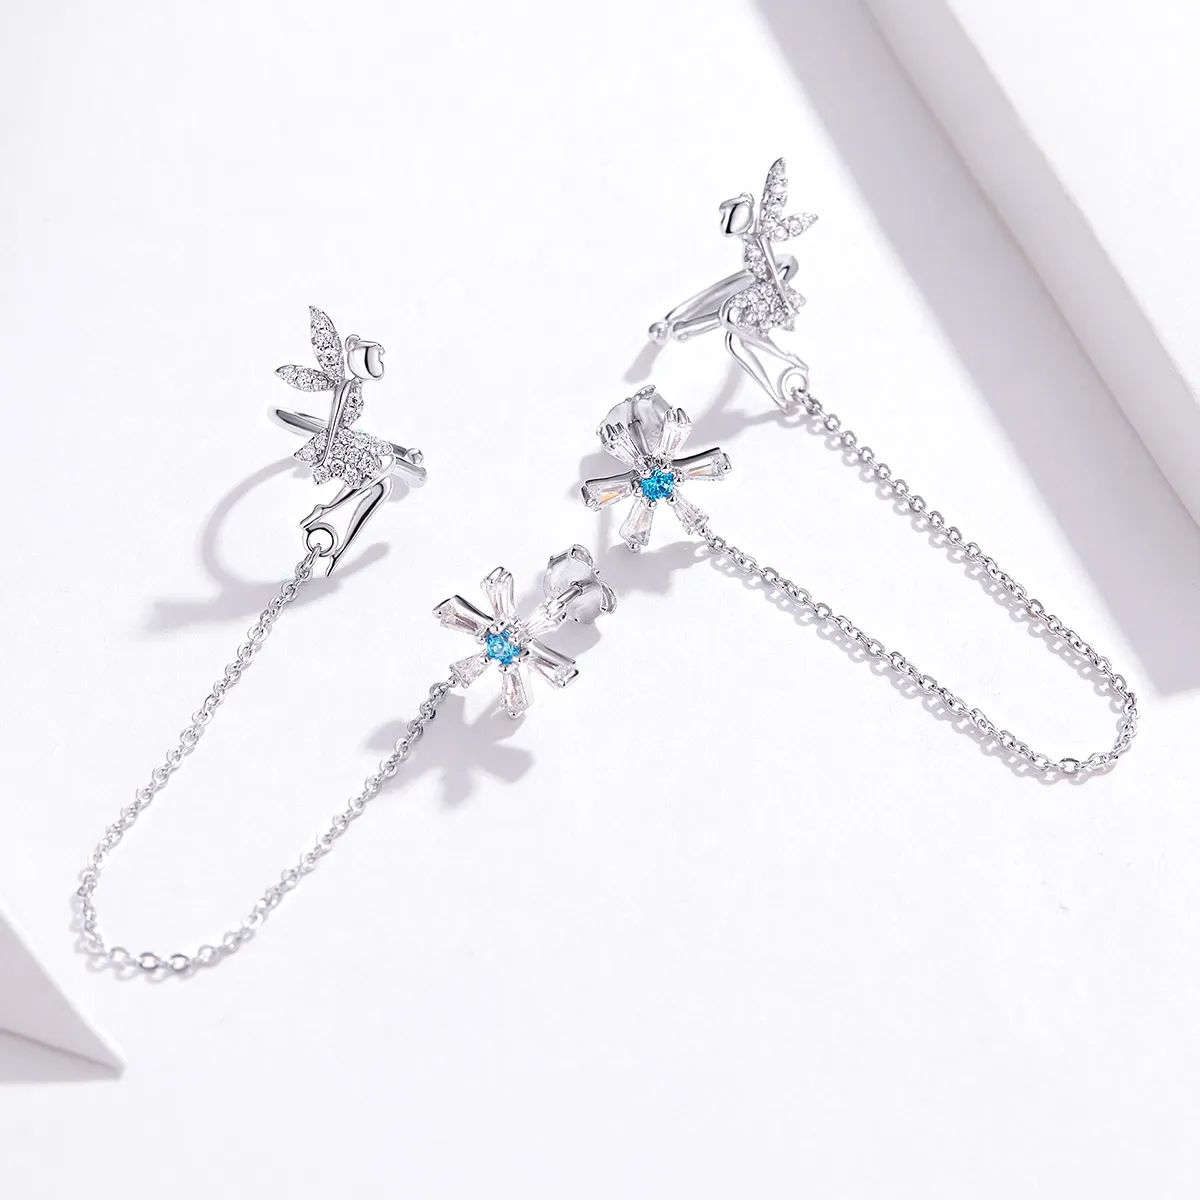 Pandora Style Flower Spirit Hanging Earrings - BSE201